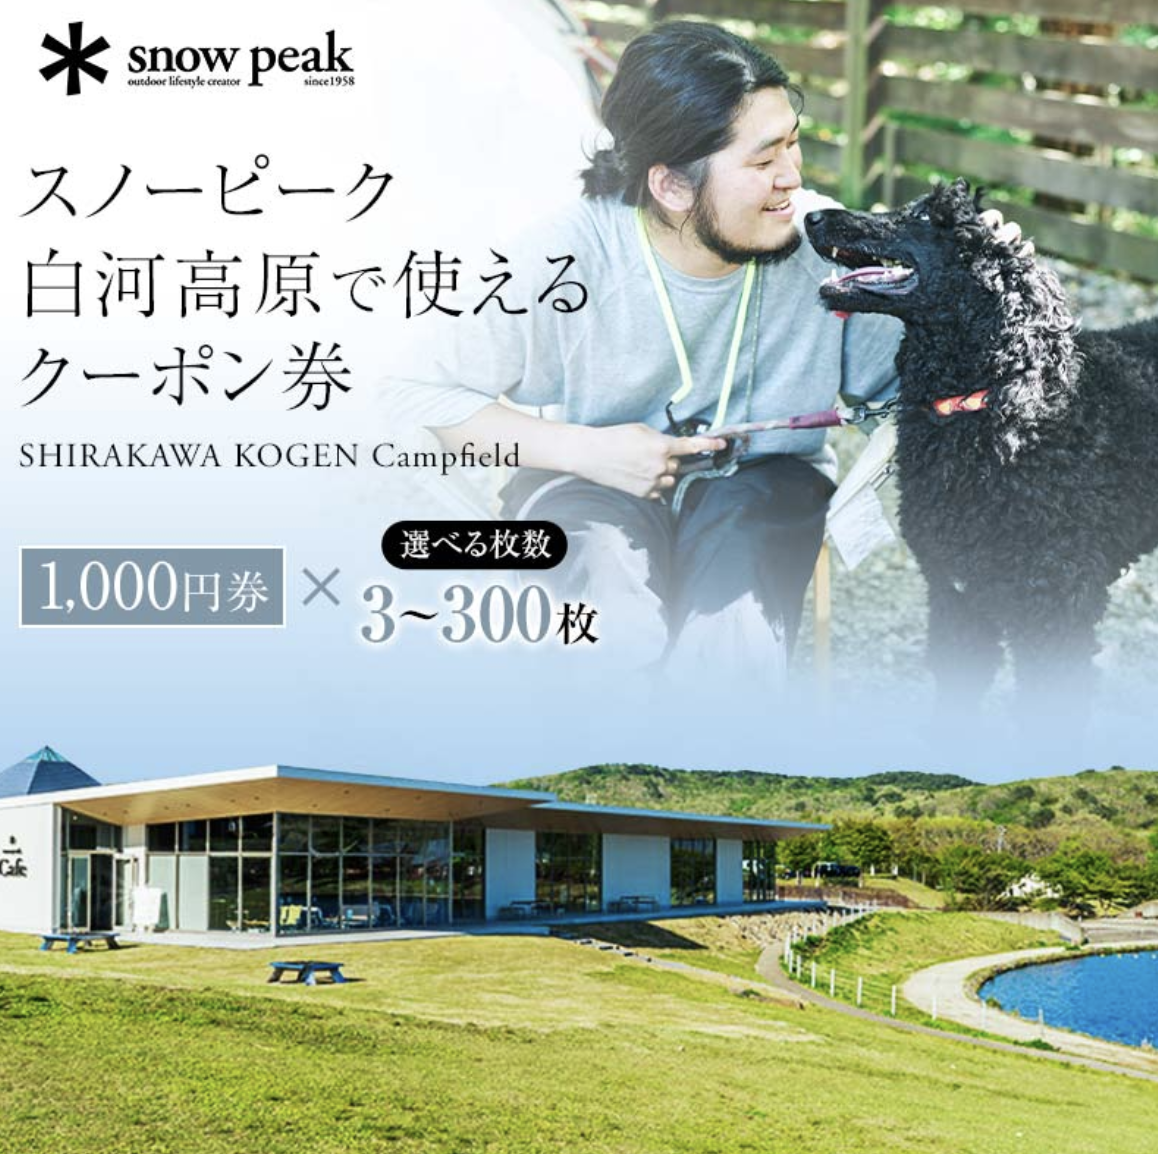 Snow Peak 白河高原 クーポン券 金額が選べる 3000円～300,000円相当